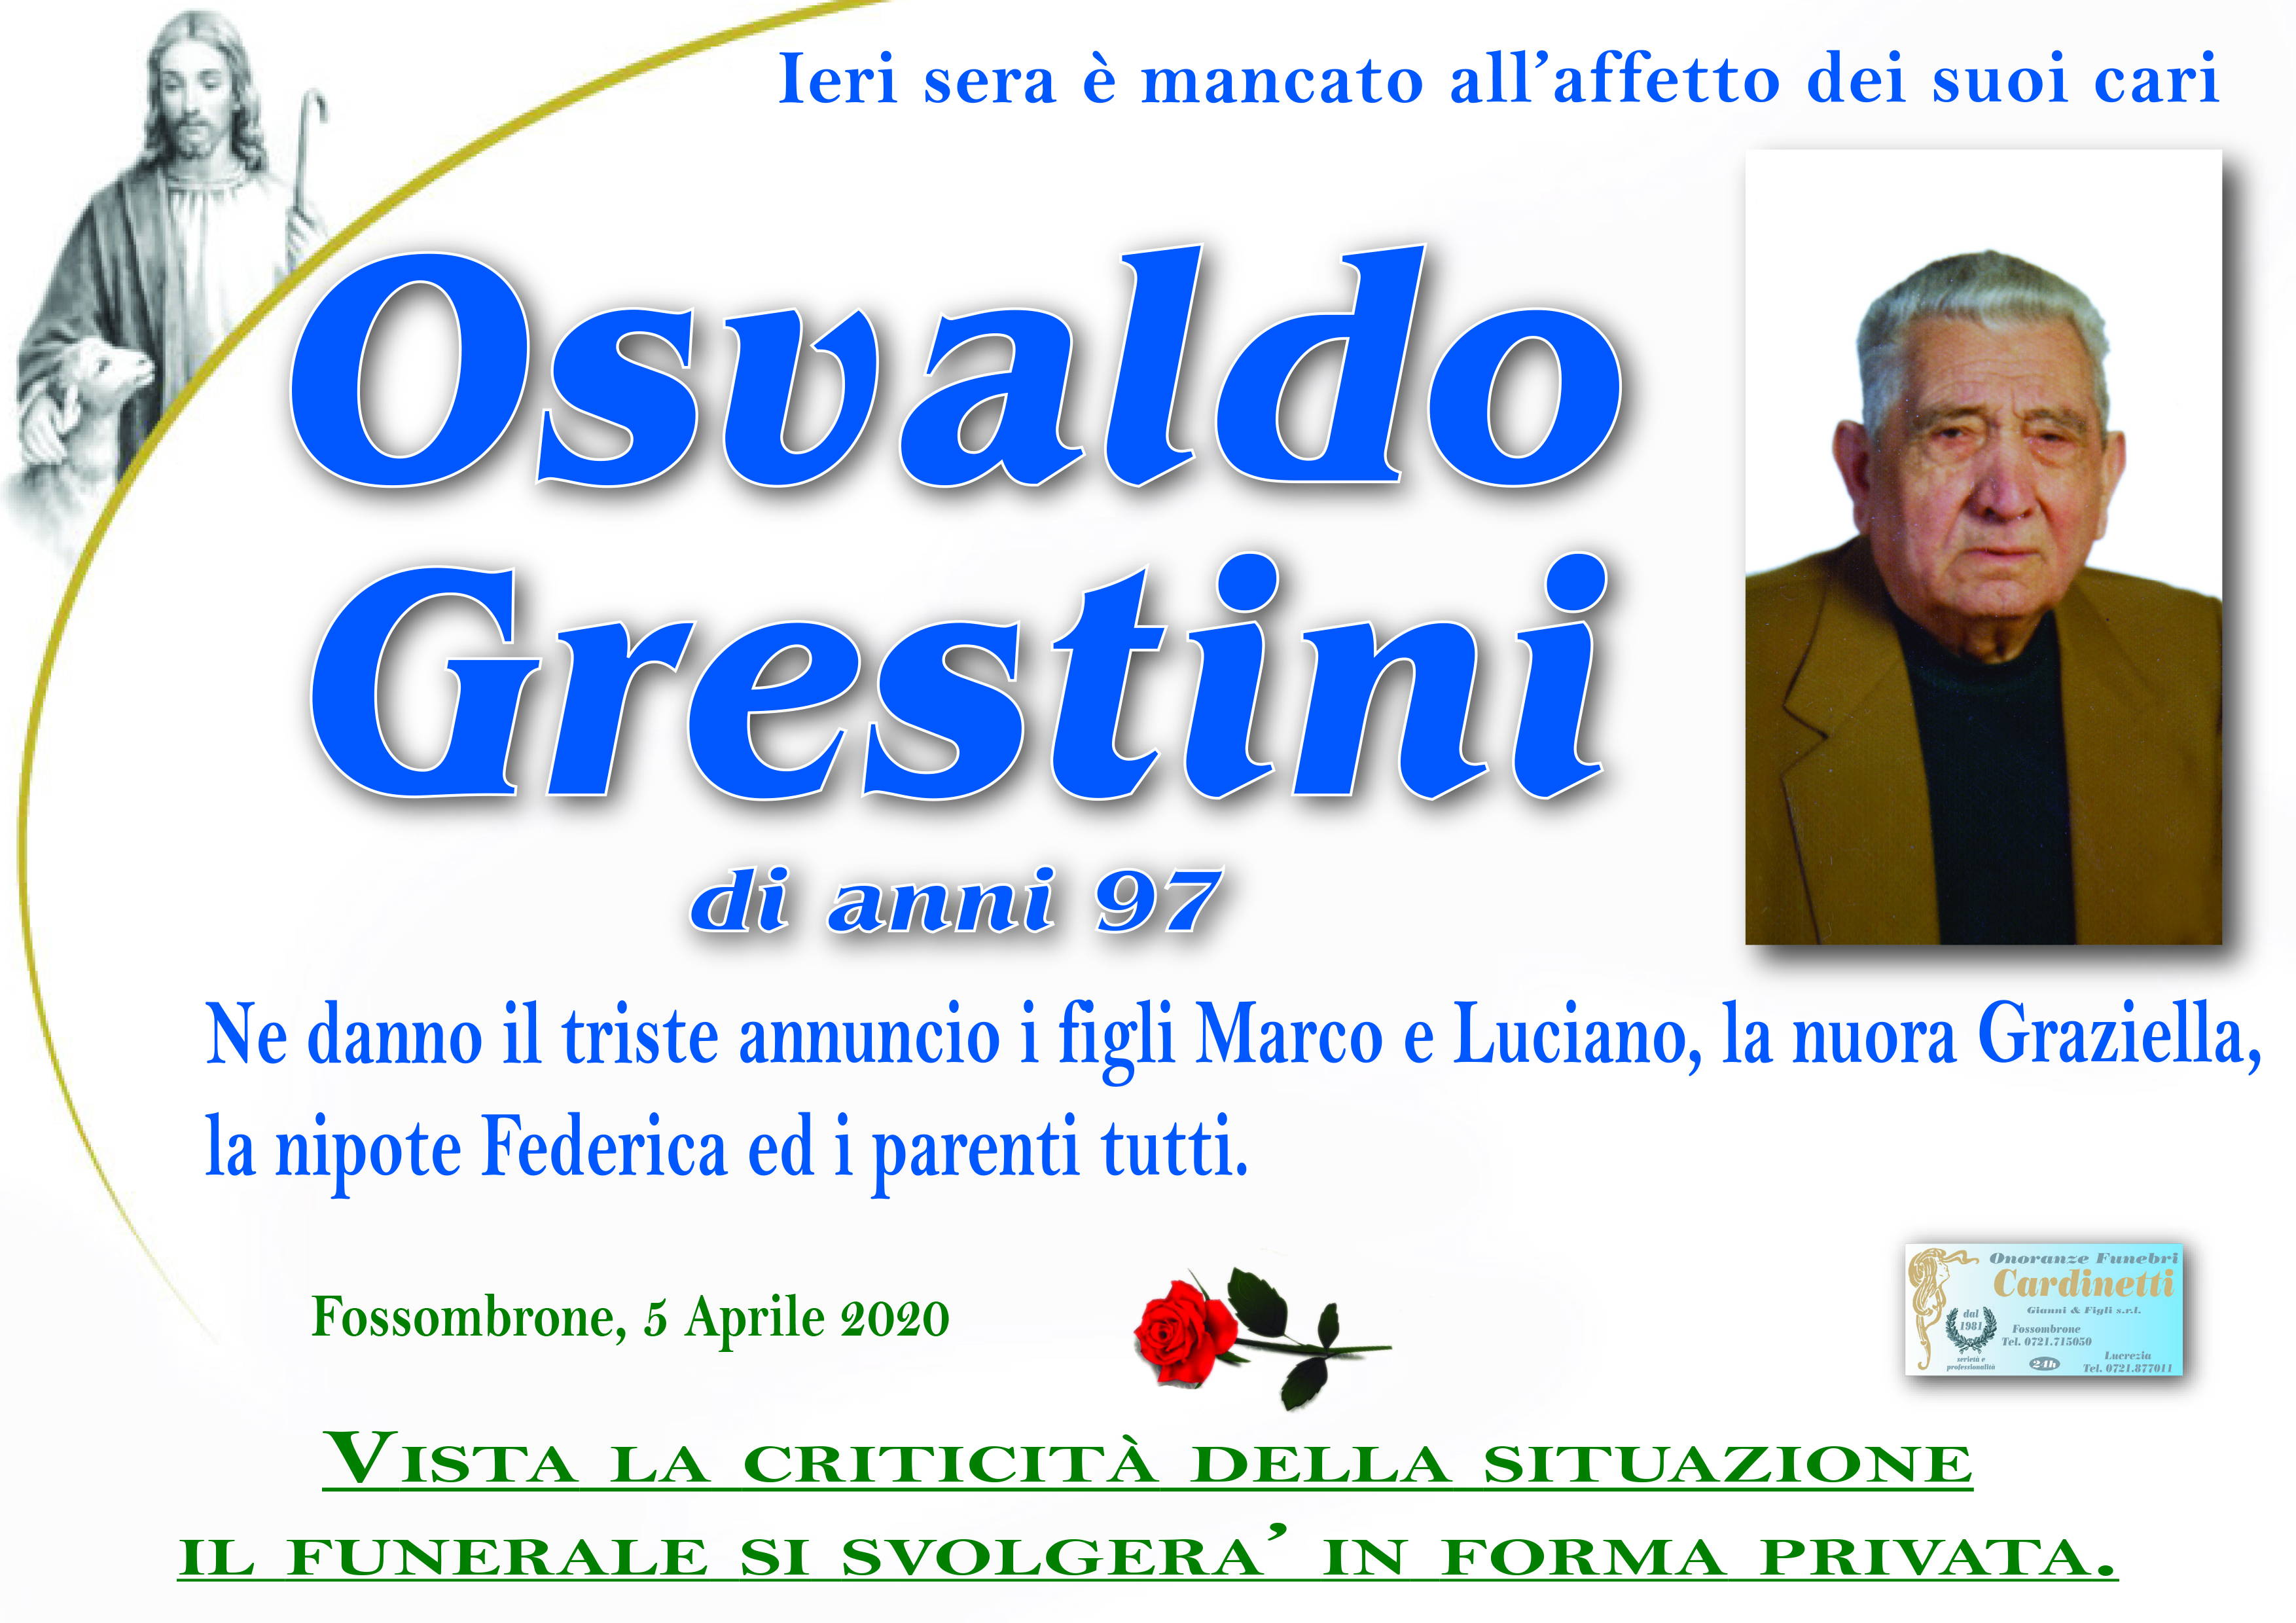 Osvaldo Grestini